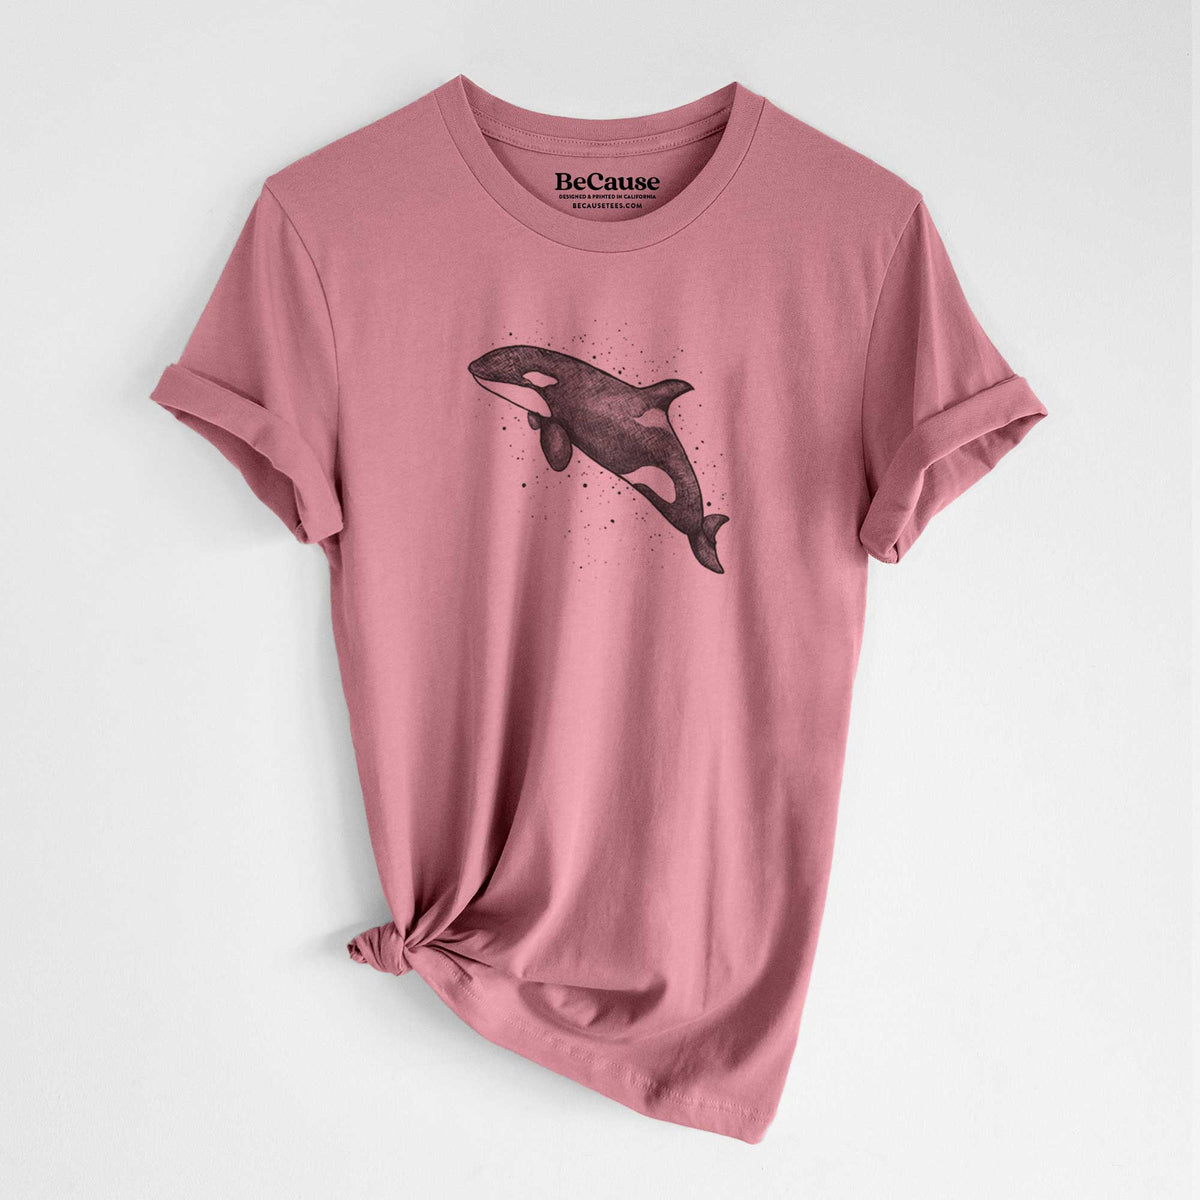 Orca Whale - Lightweight 100% Cotton Unisex Crewneck